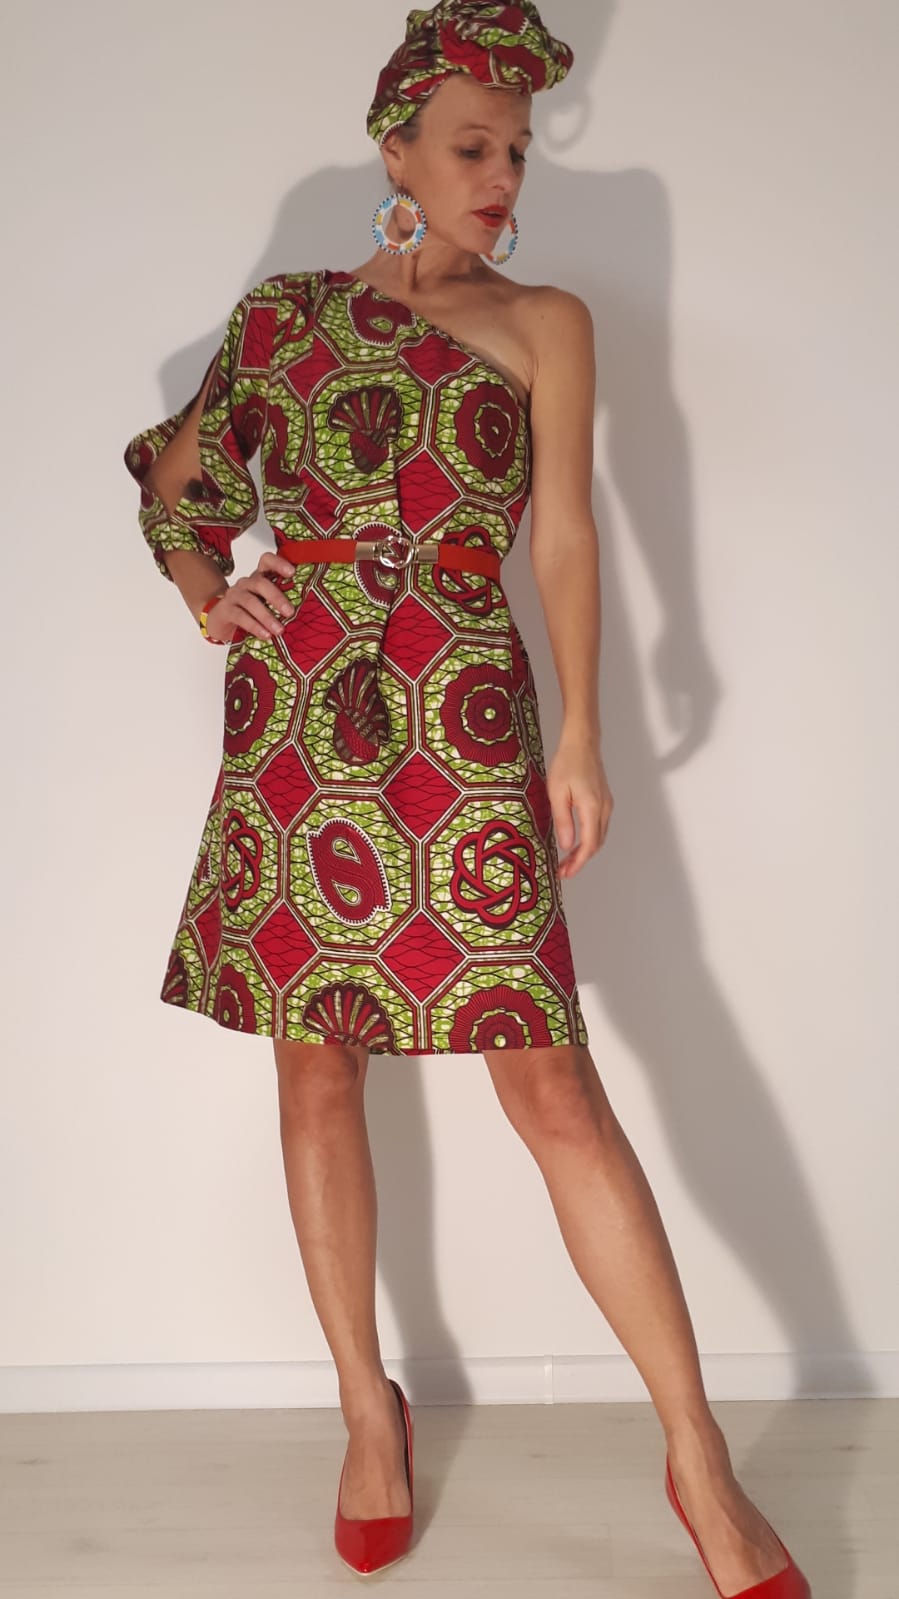 Šaty z africké látky / Ankara dress